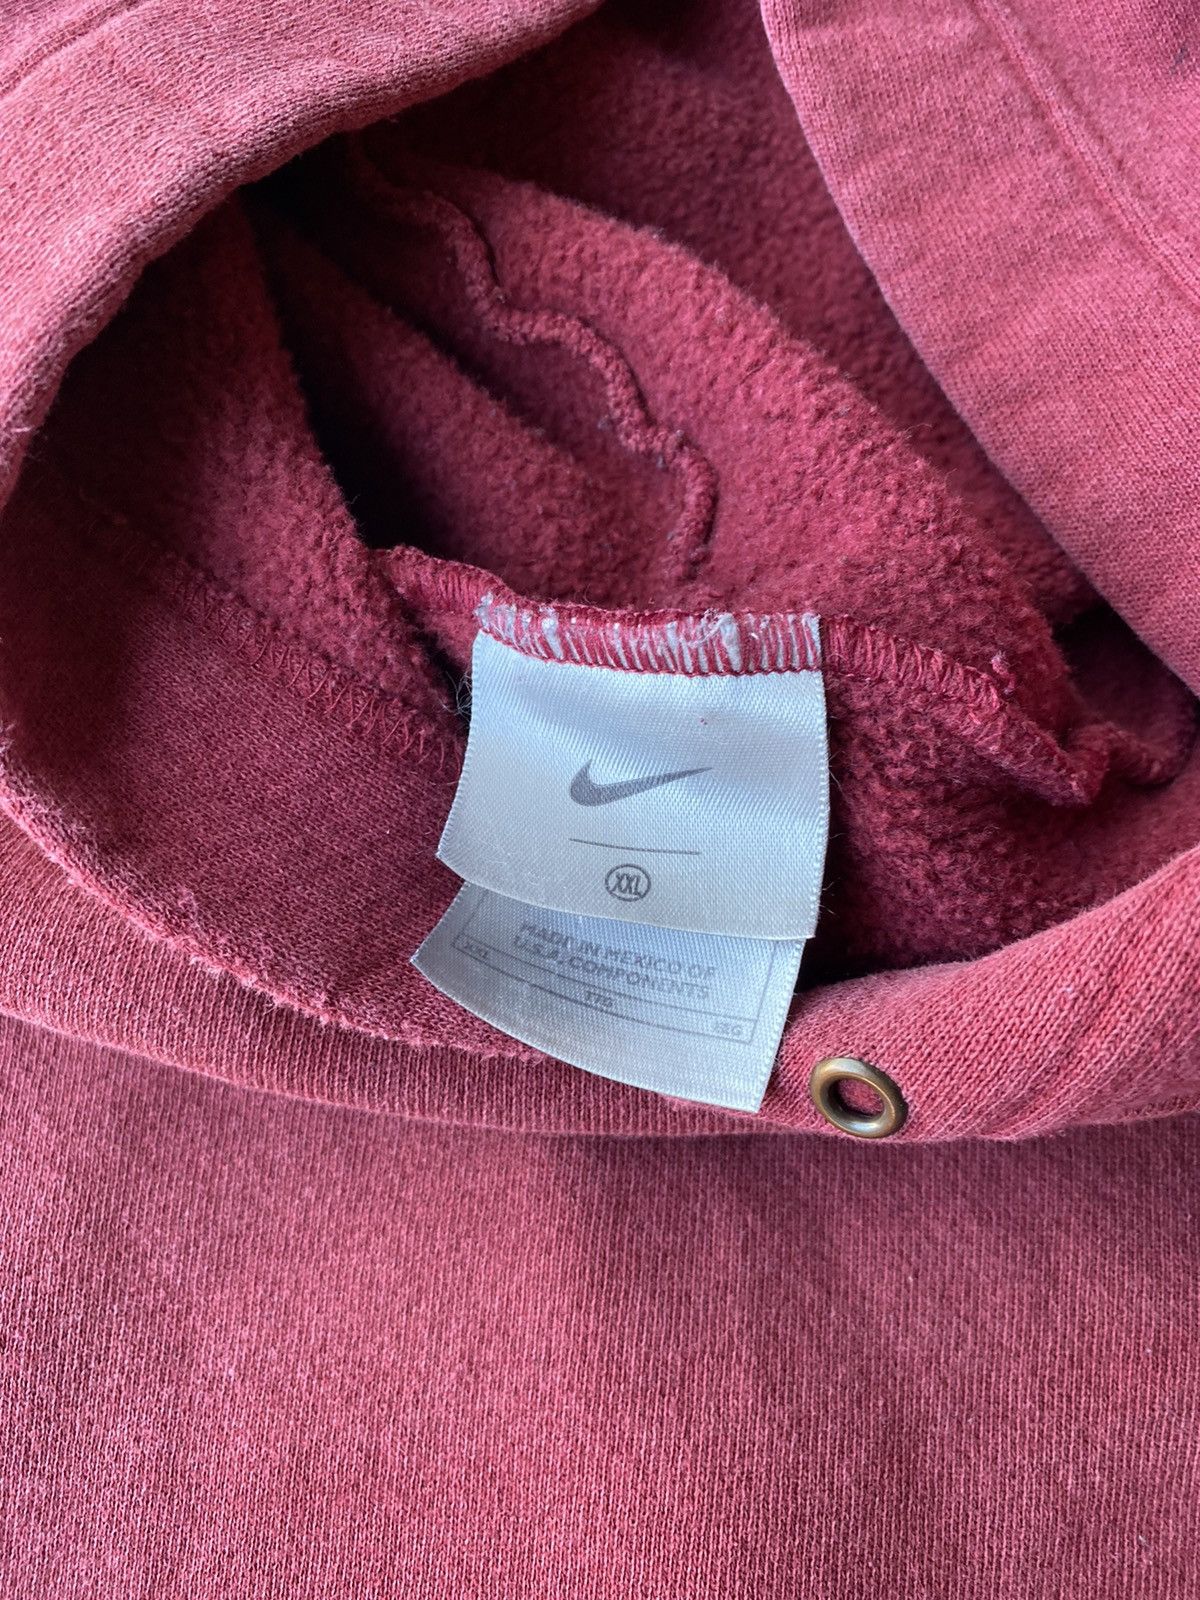 Nike Nike Center Swoosh hoodie Size US XXL / EU 58 / 5 - 3 Thumbnail